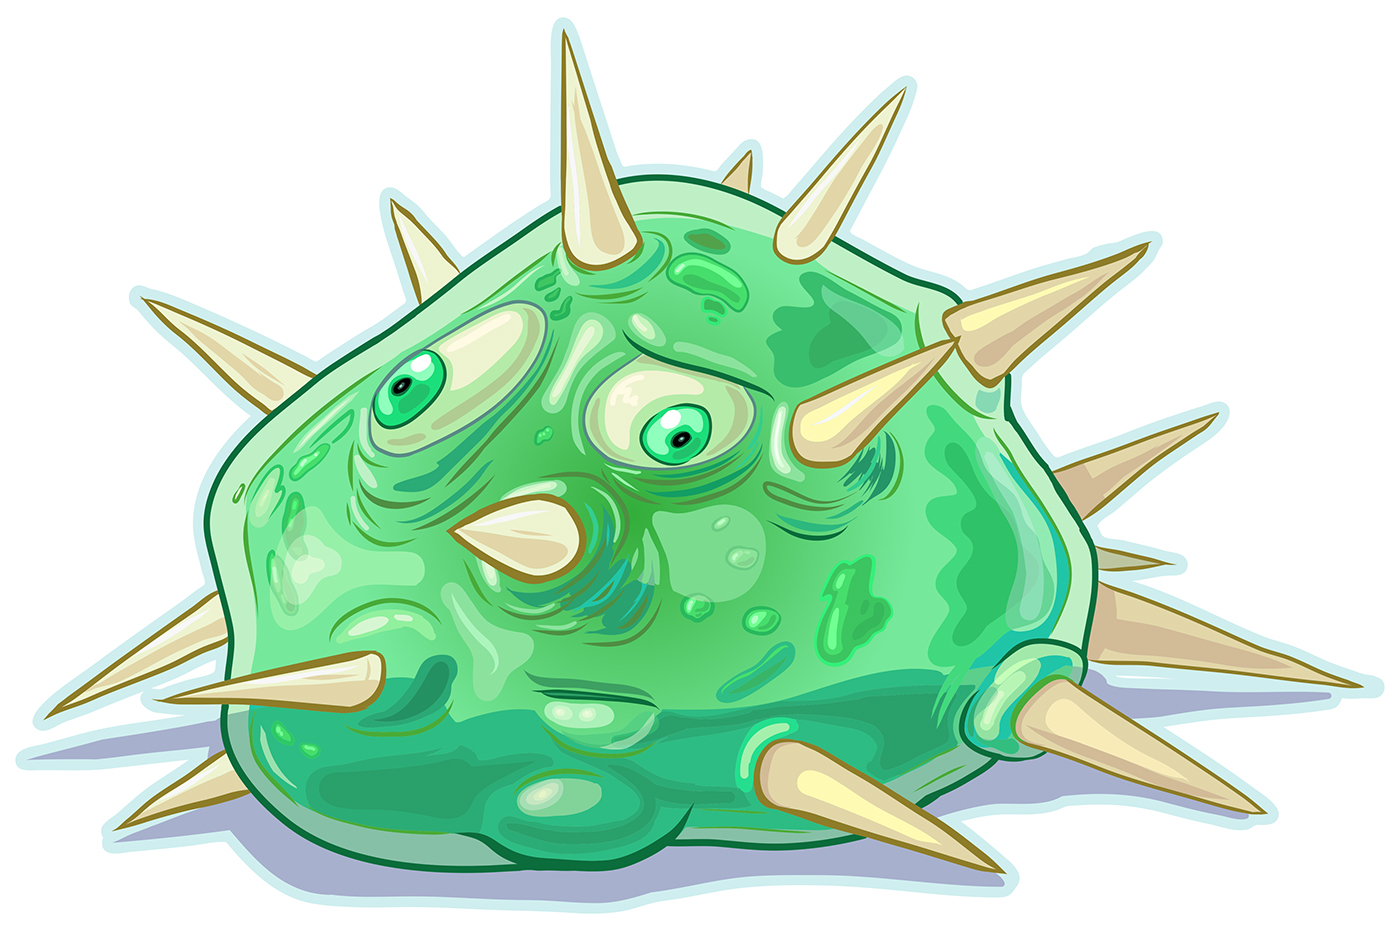 Green Slime Blob Monster or Creature on Behance